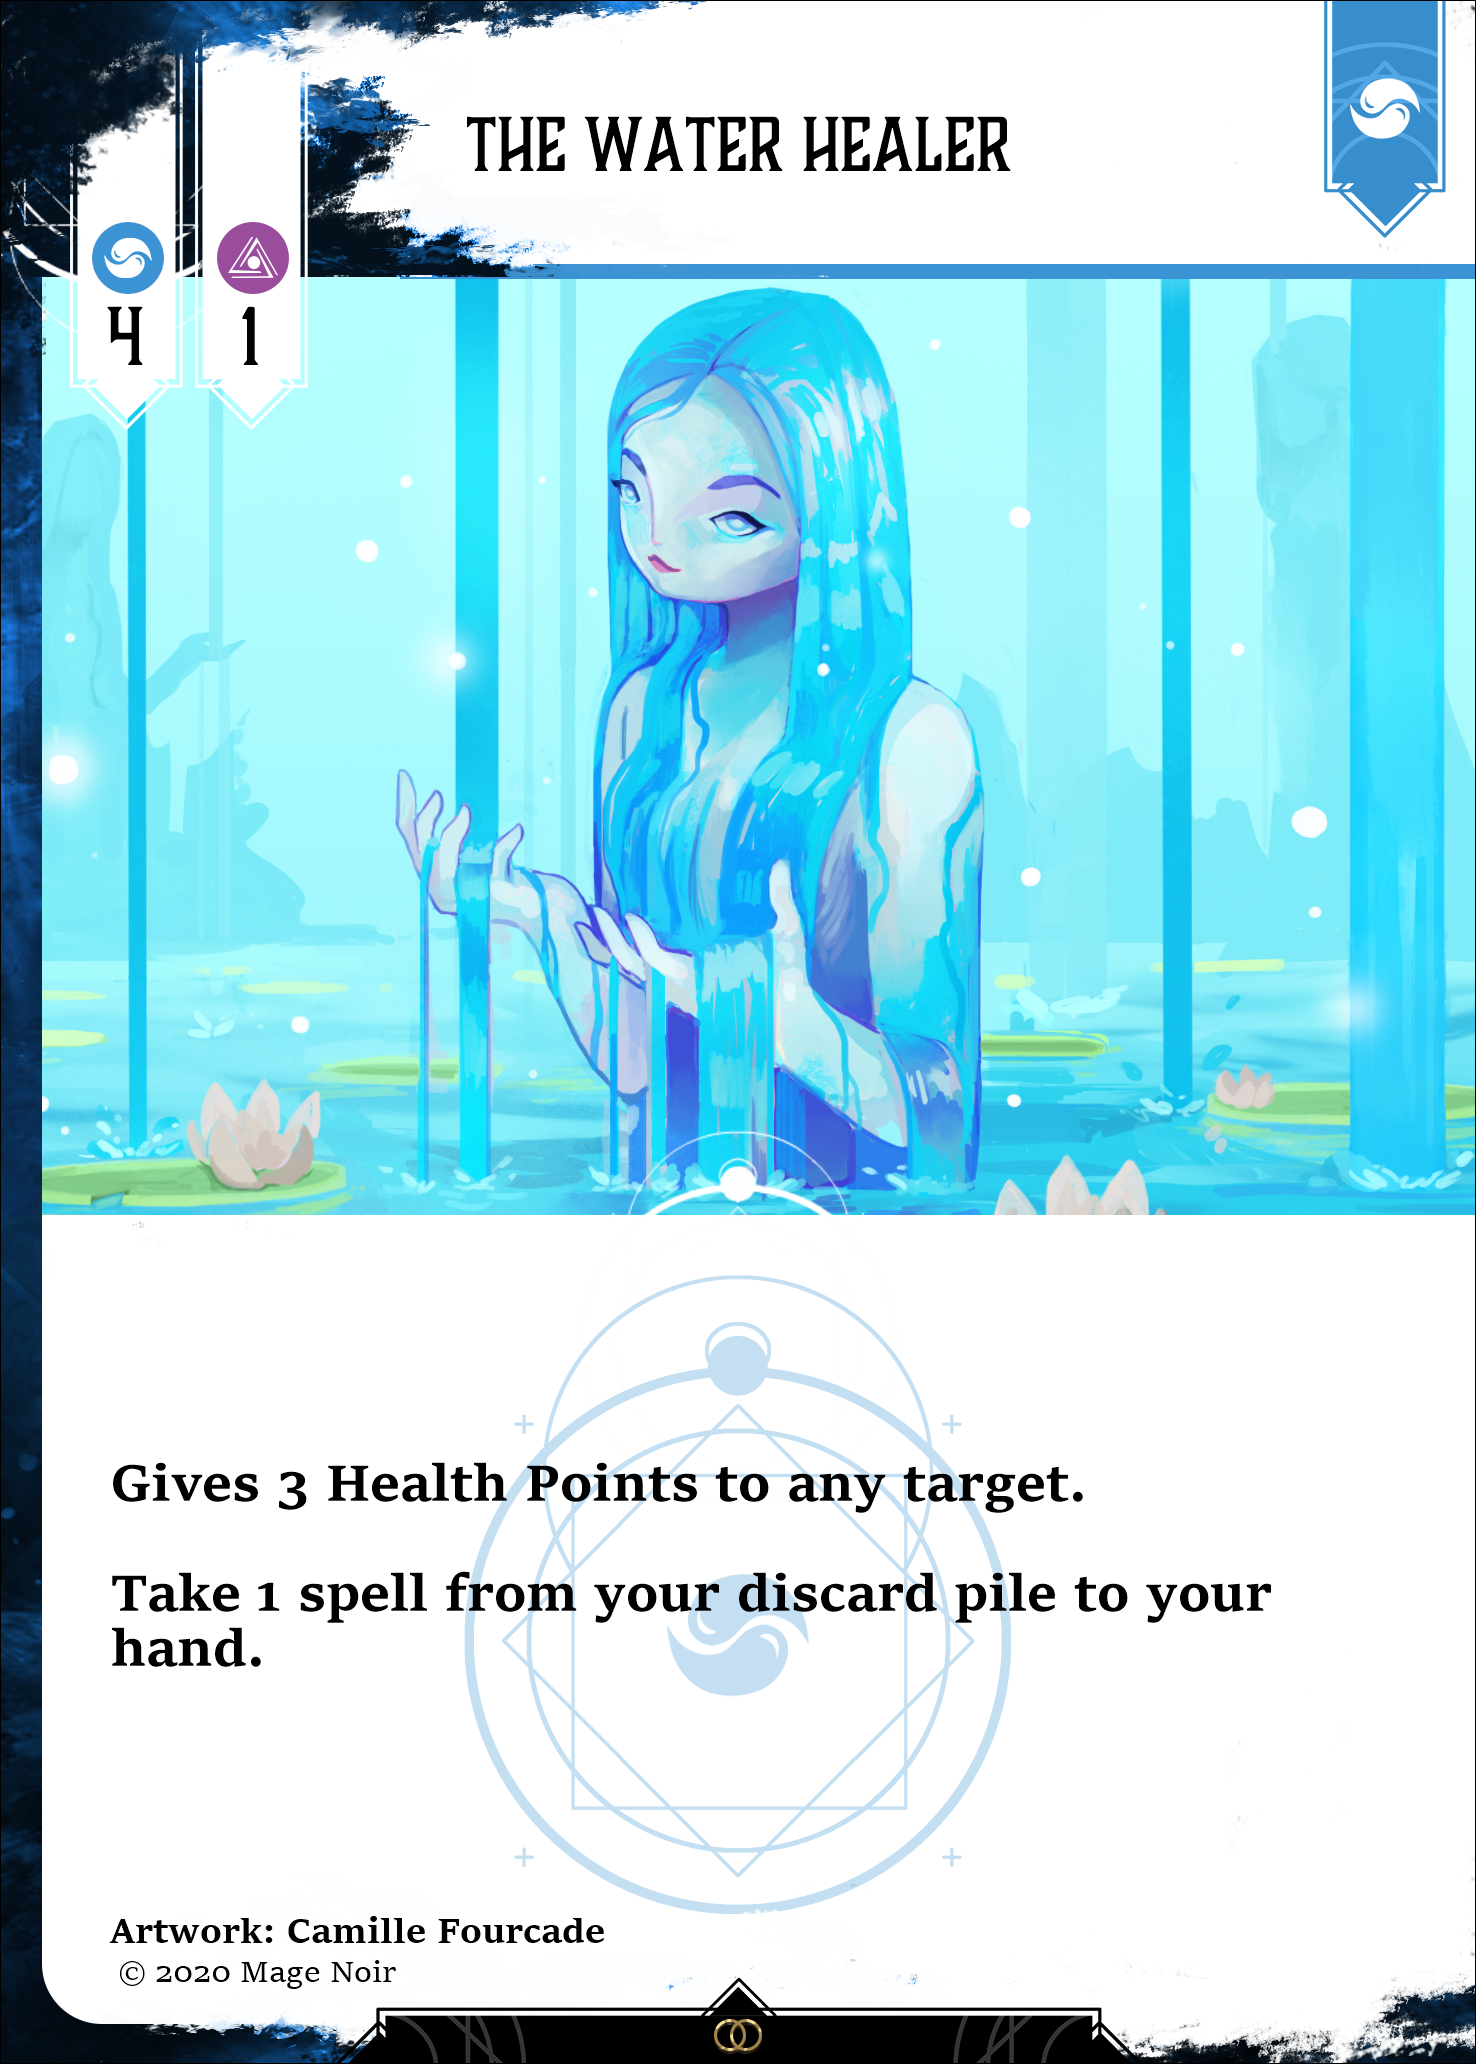 The water healer card